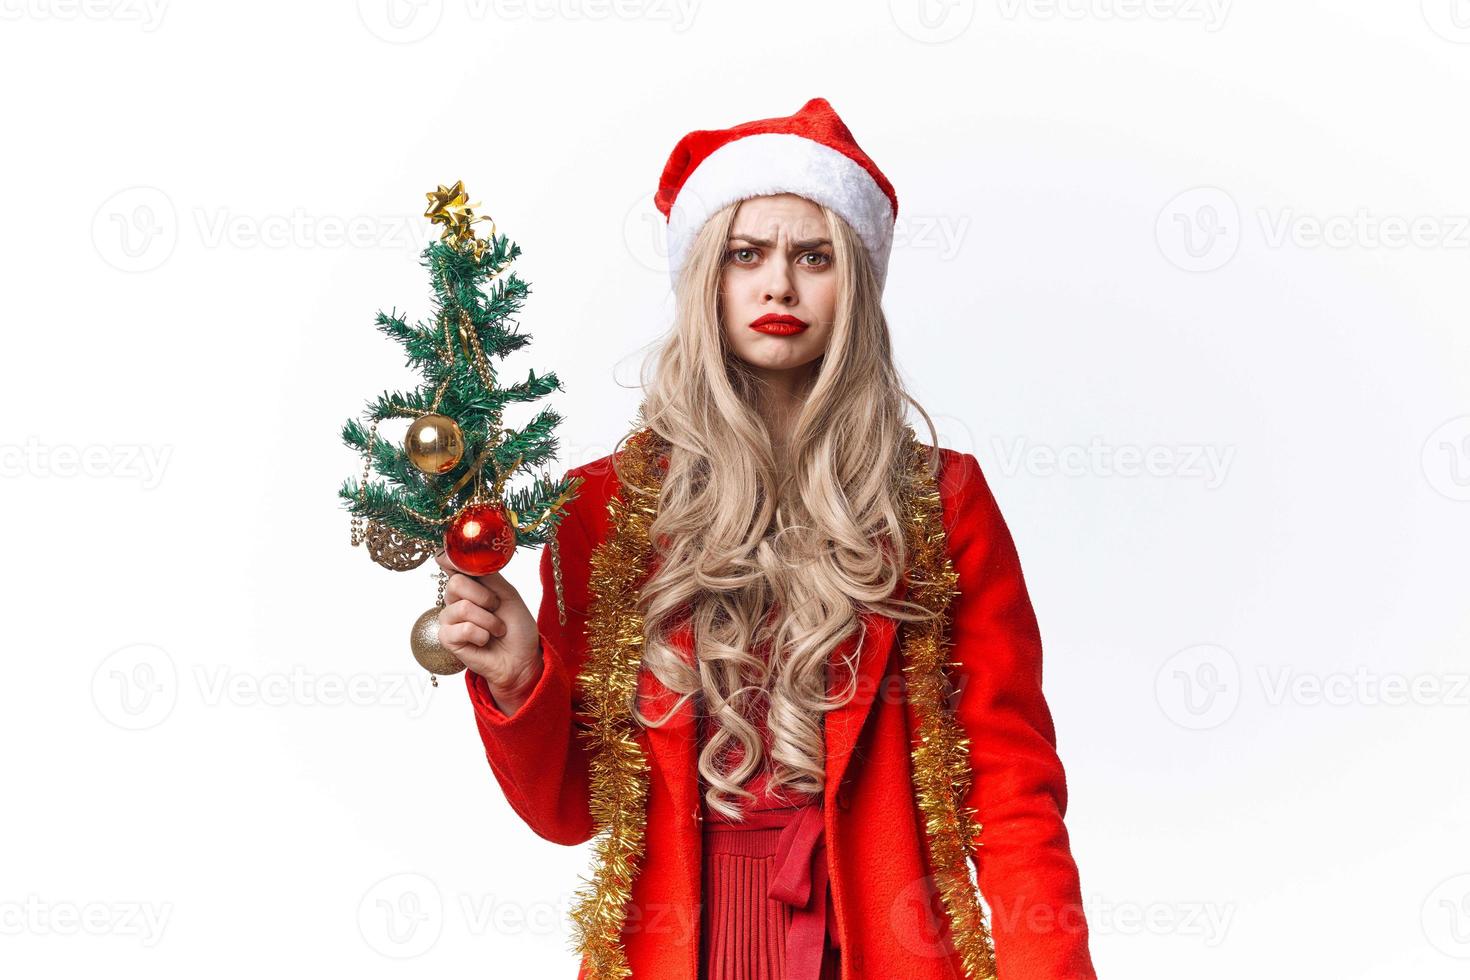 cheerful woman dressed as Santa Christmas tree toys lifestyle fashion photo